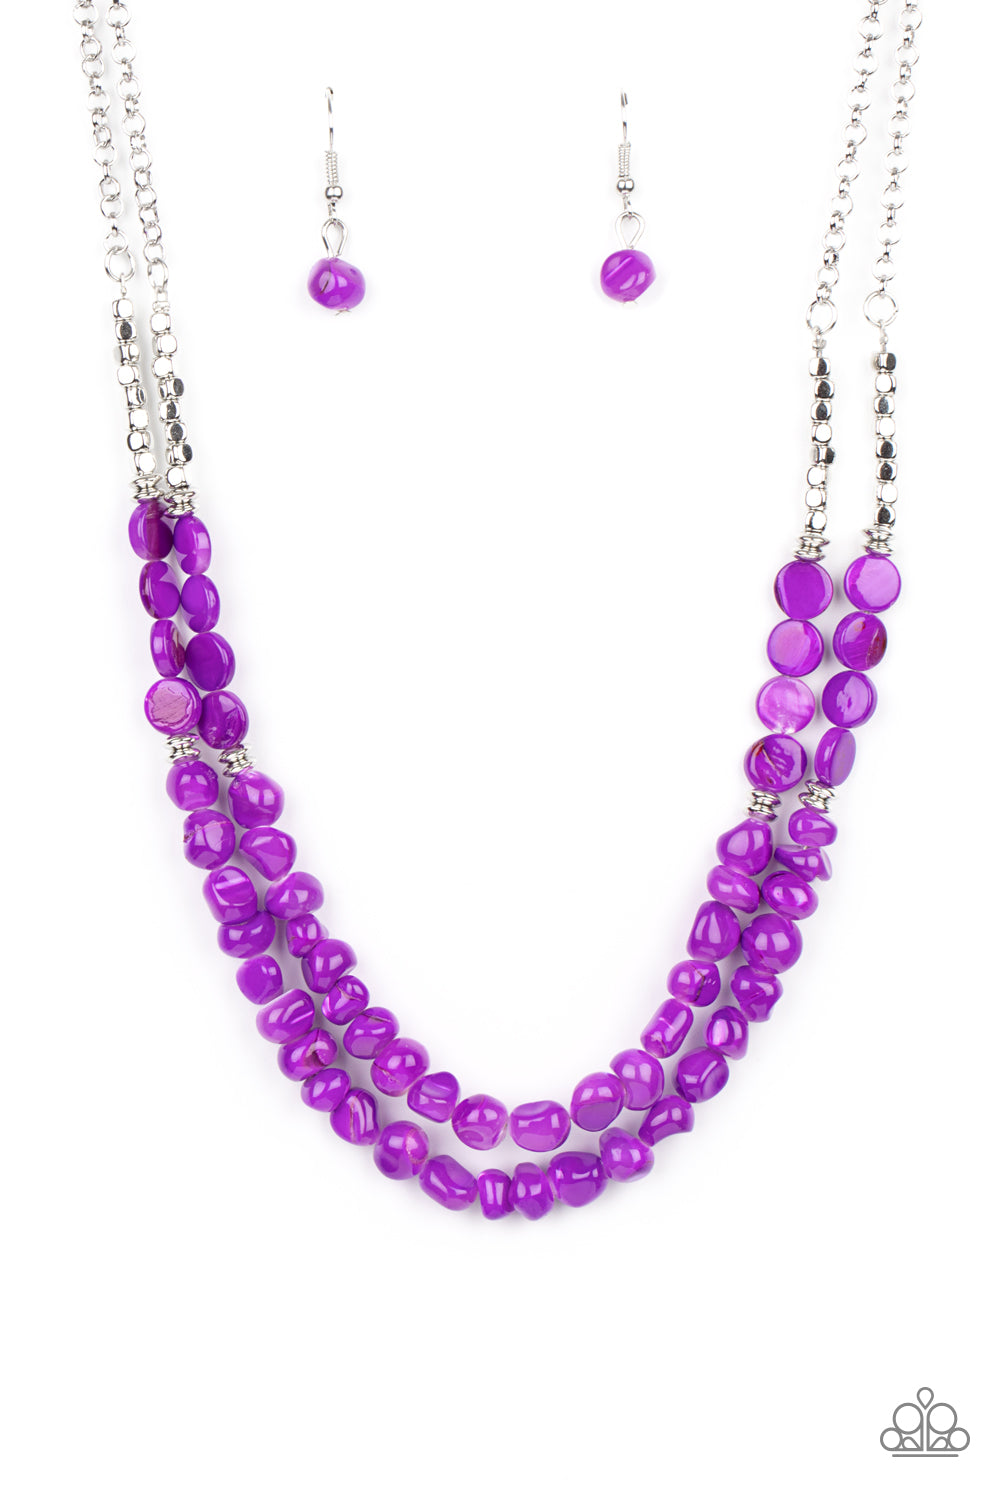 five-dollar-jewelry-staycation-status-purple-necklace-paparazzi-accessories